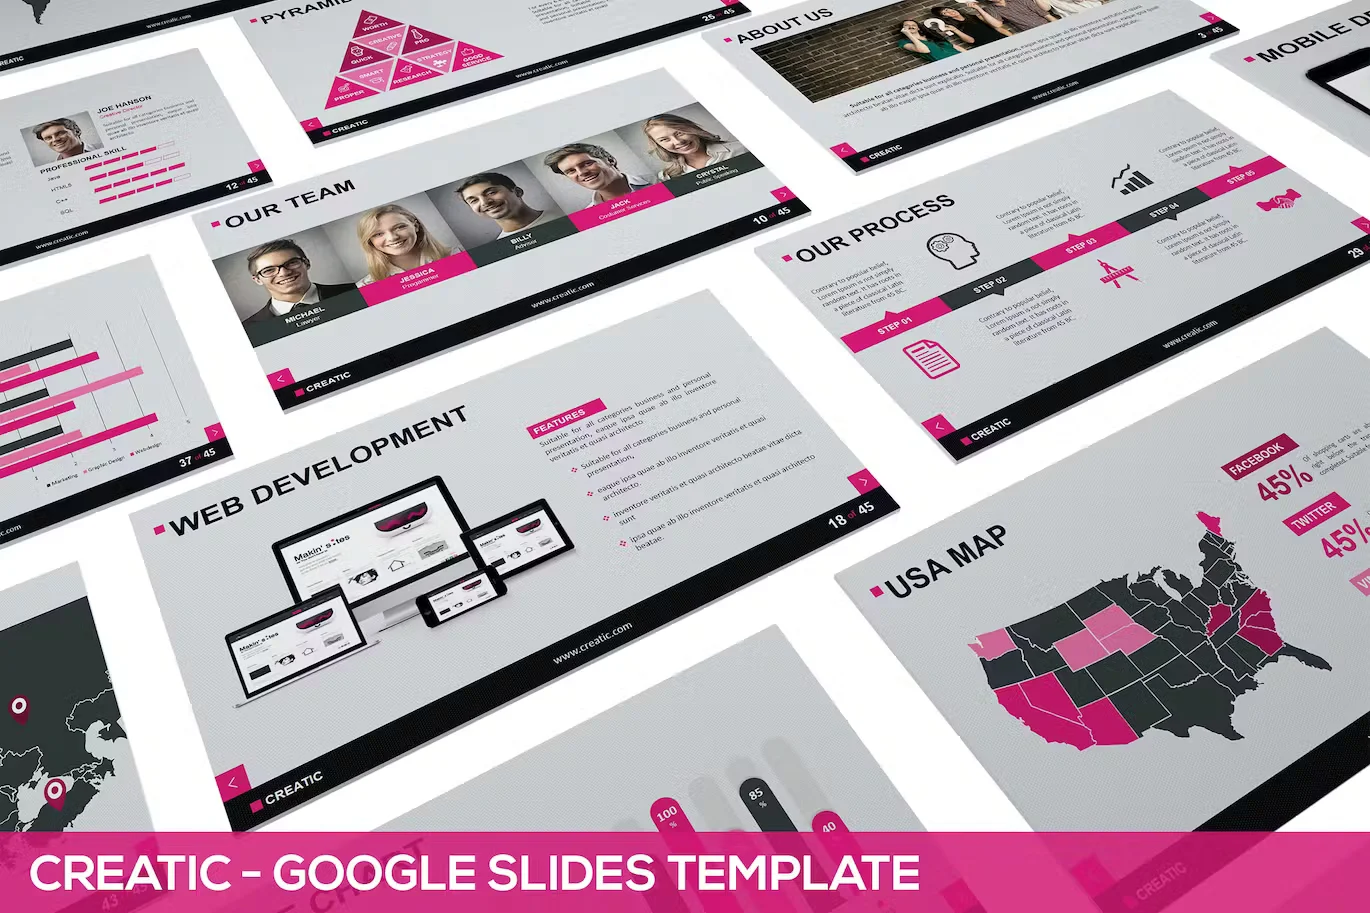 Creatic-Google-Slides-Template-01